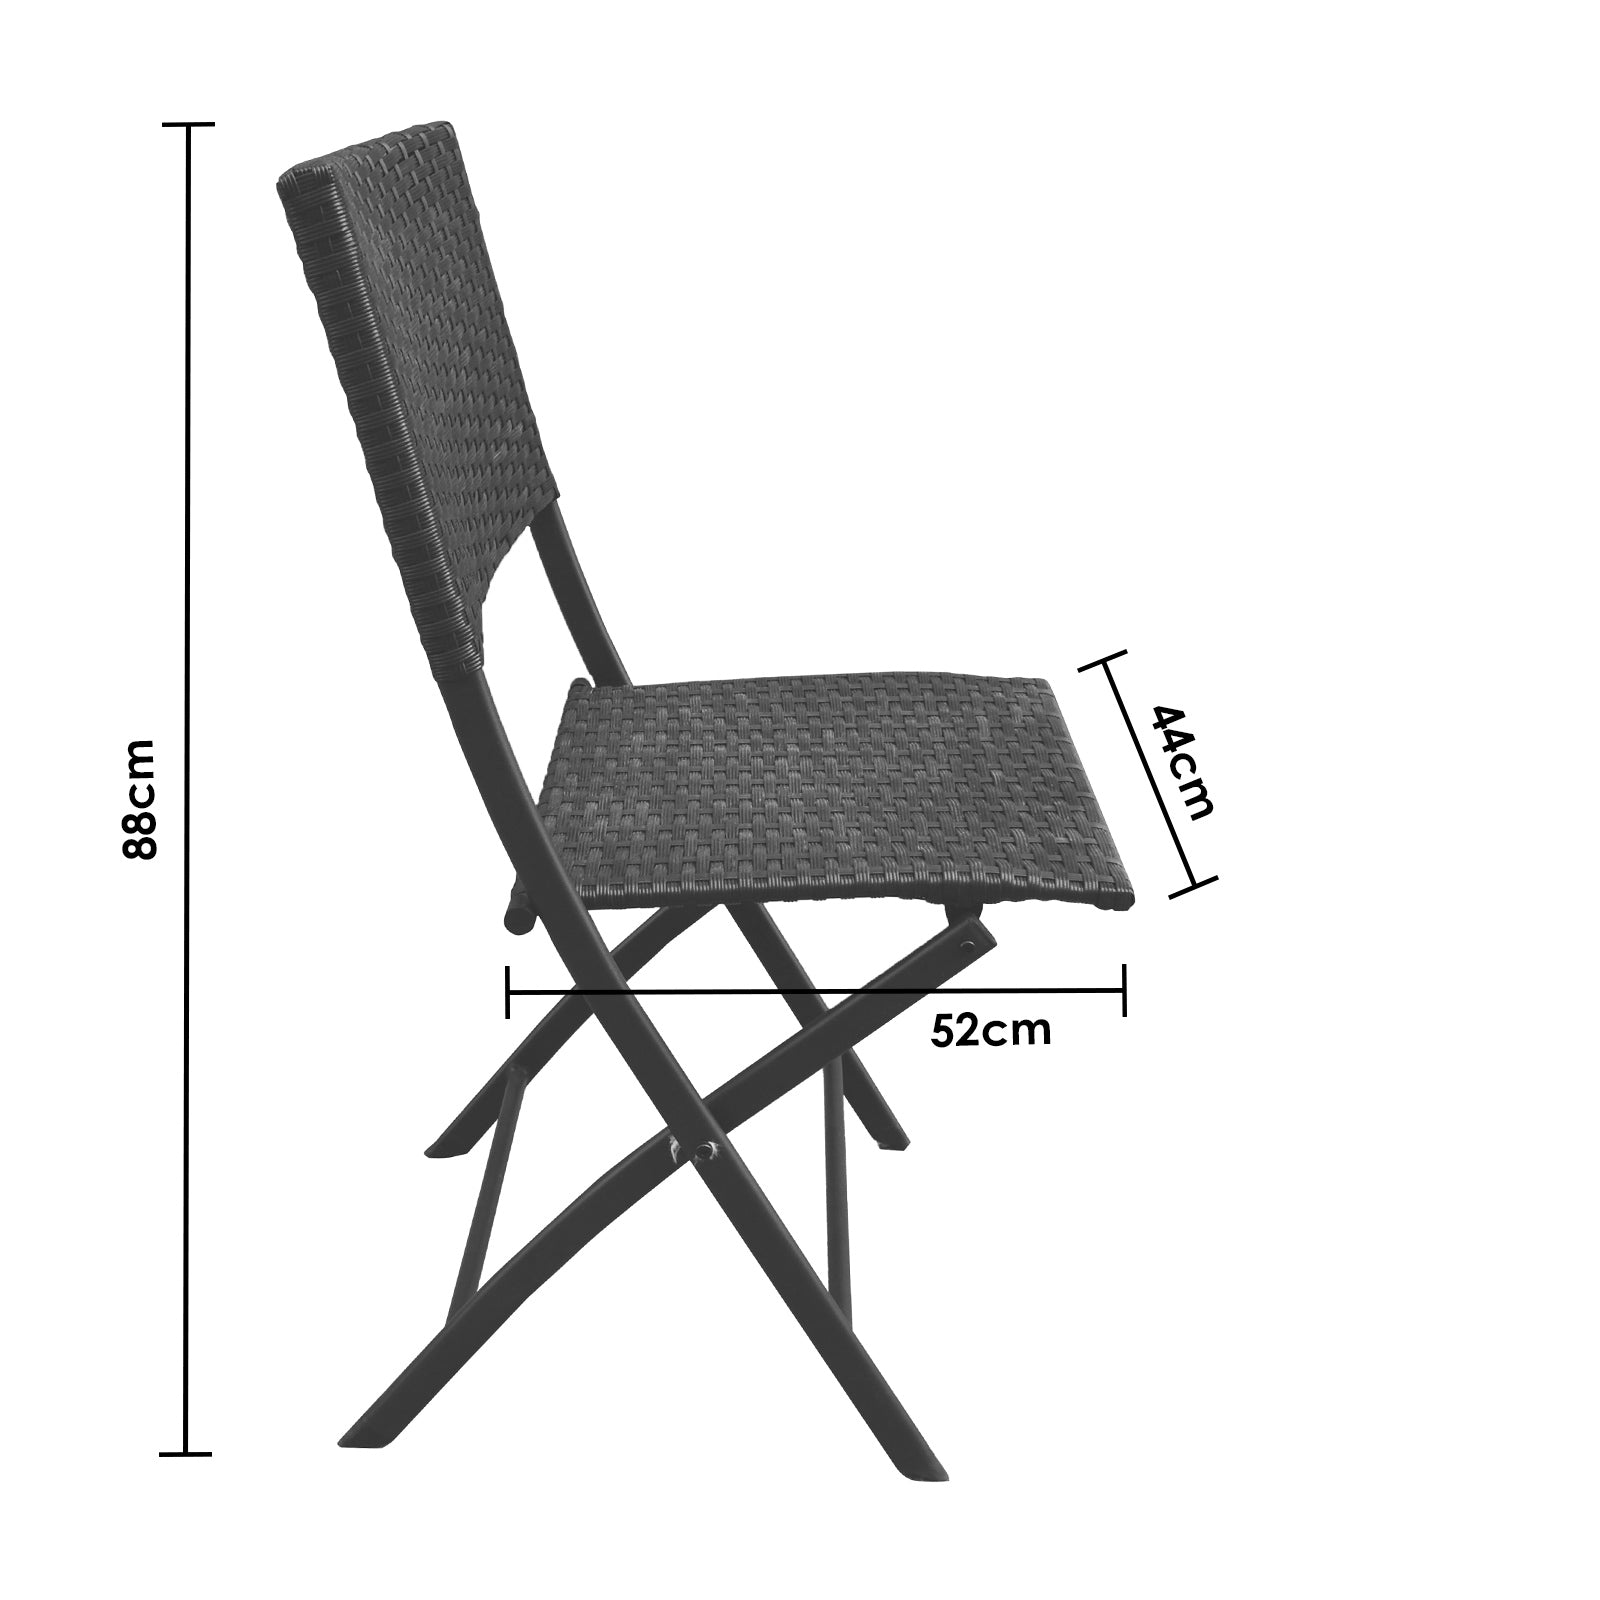 Arcadia Furniture Outdoor 3 Piece Foldable Rattan Coffee Table Set Garden Patio - Black